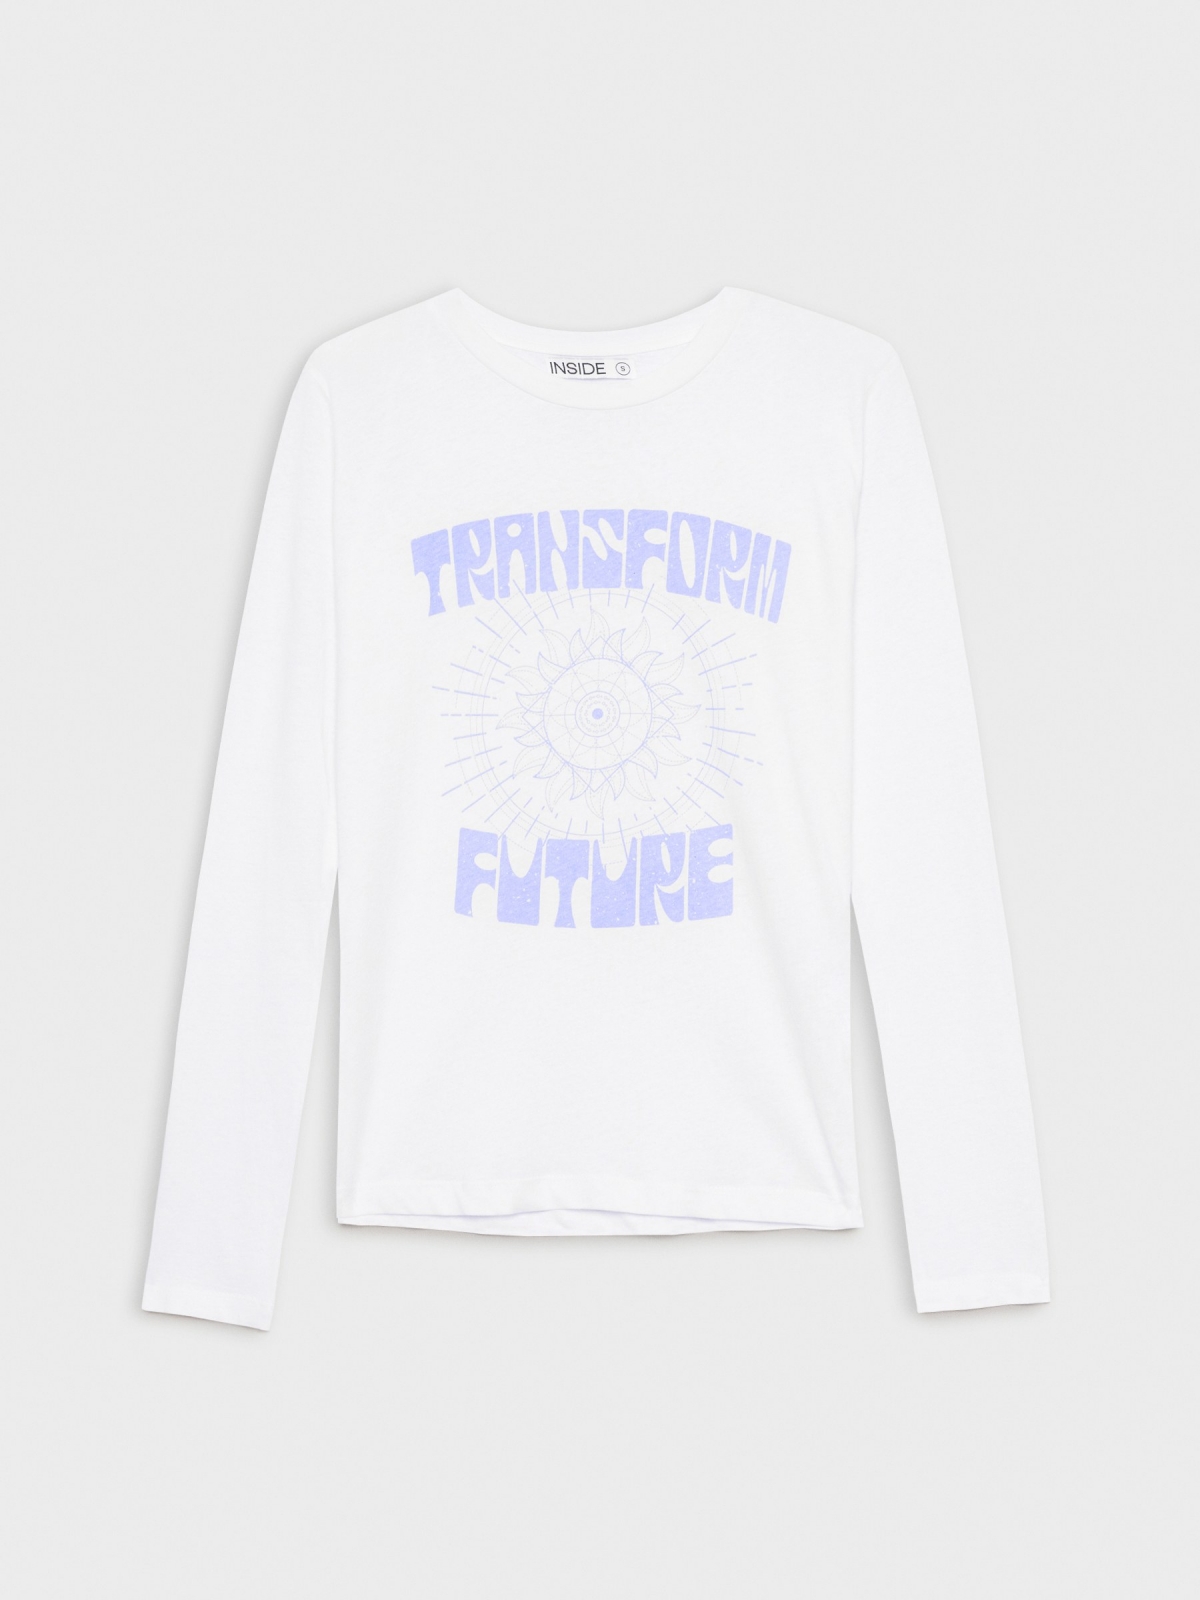  Transform Future T-shirt white